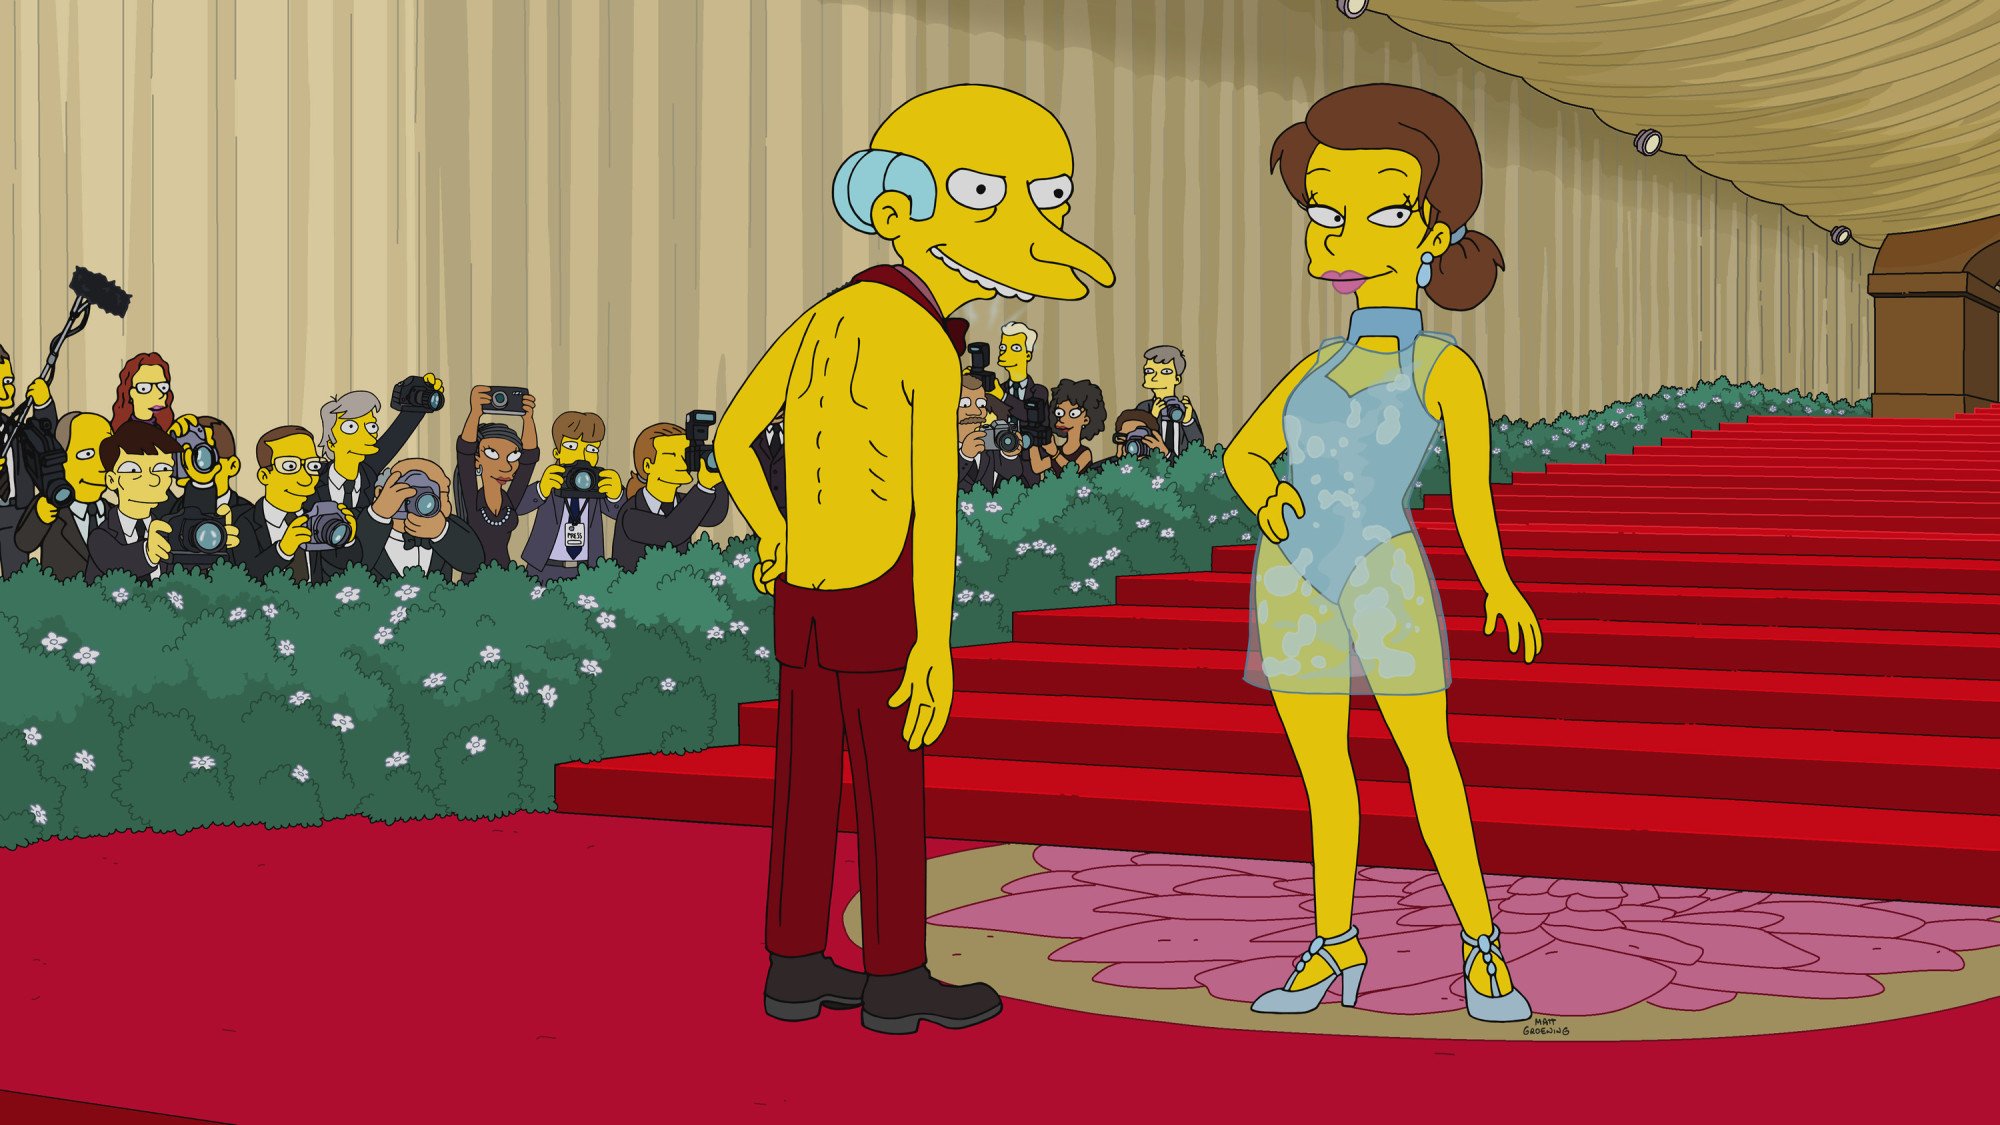 Lisa Simpson - Wikisimpsons, the Simpsons Wiki